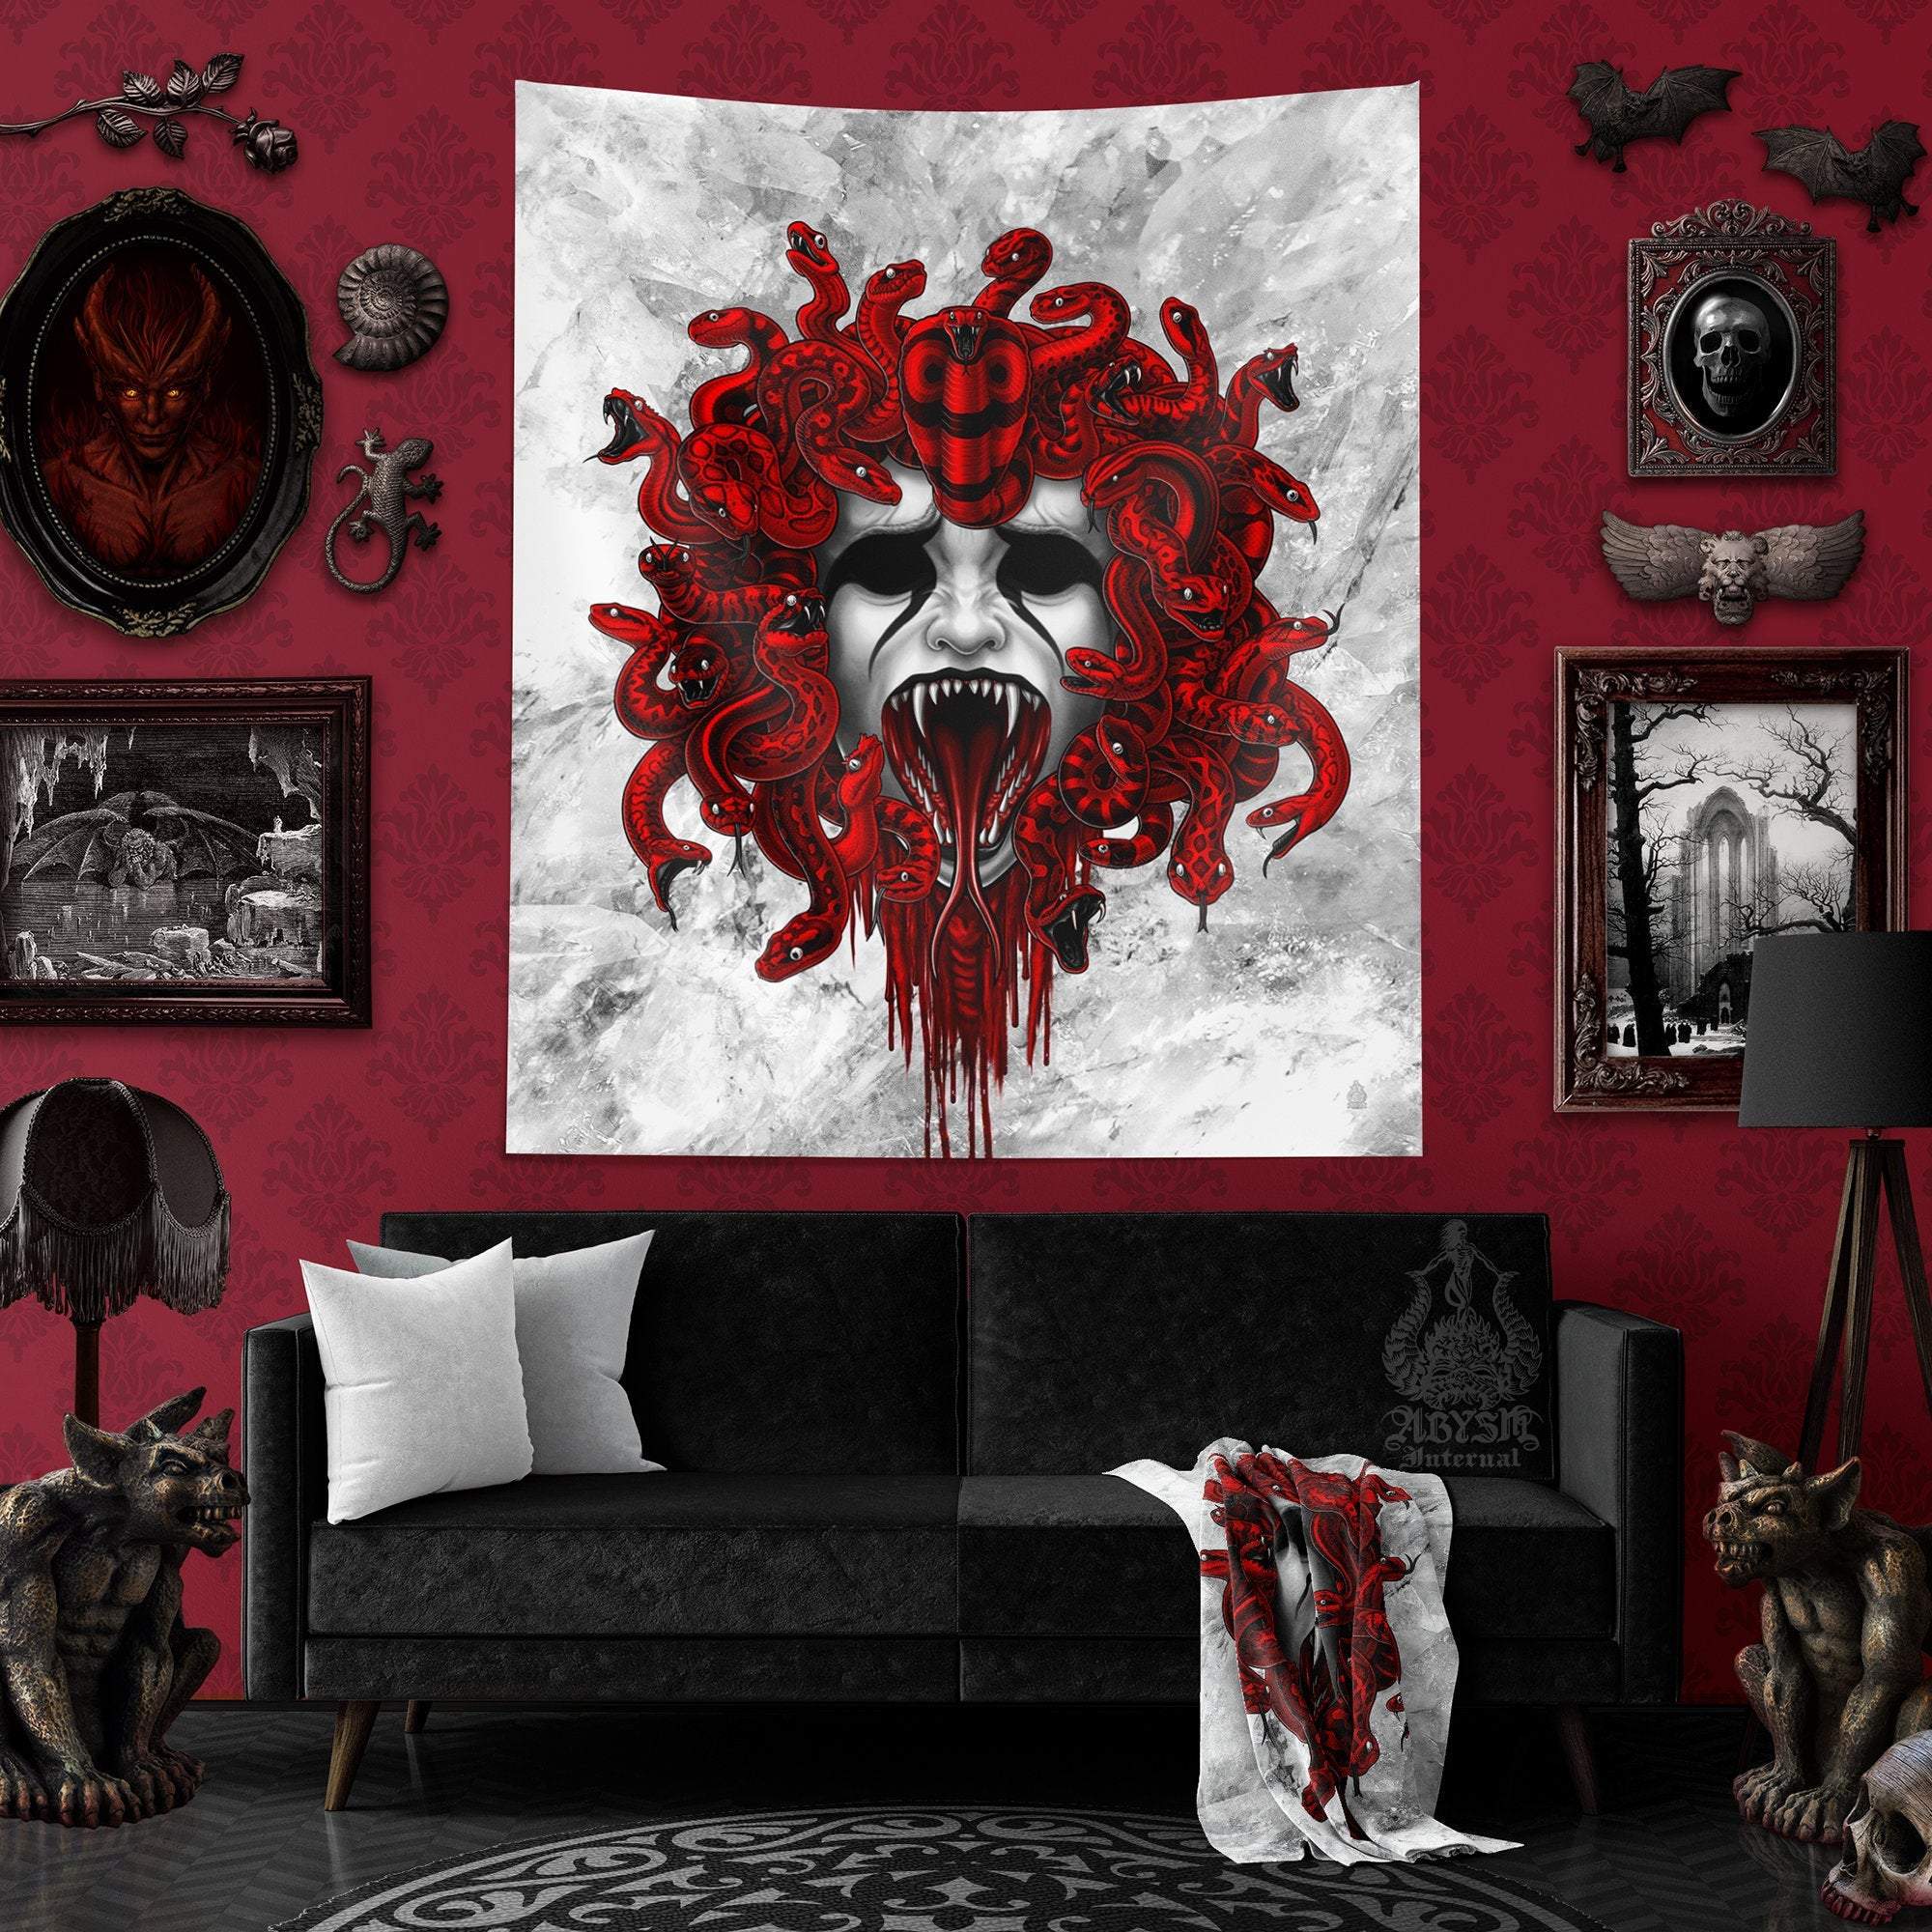 White Goth Tapestry, Medusa & Skull Wall Hanging, Gohic Home Decor, Art Print - Red Snakes - Abysm Internal